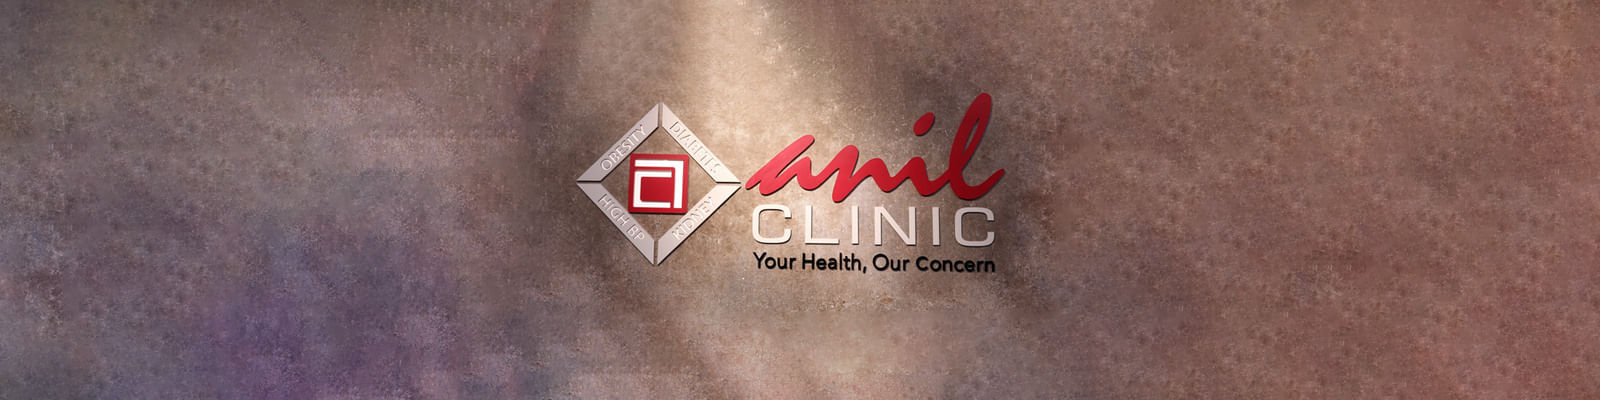 Anil Clinic